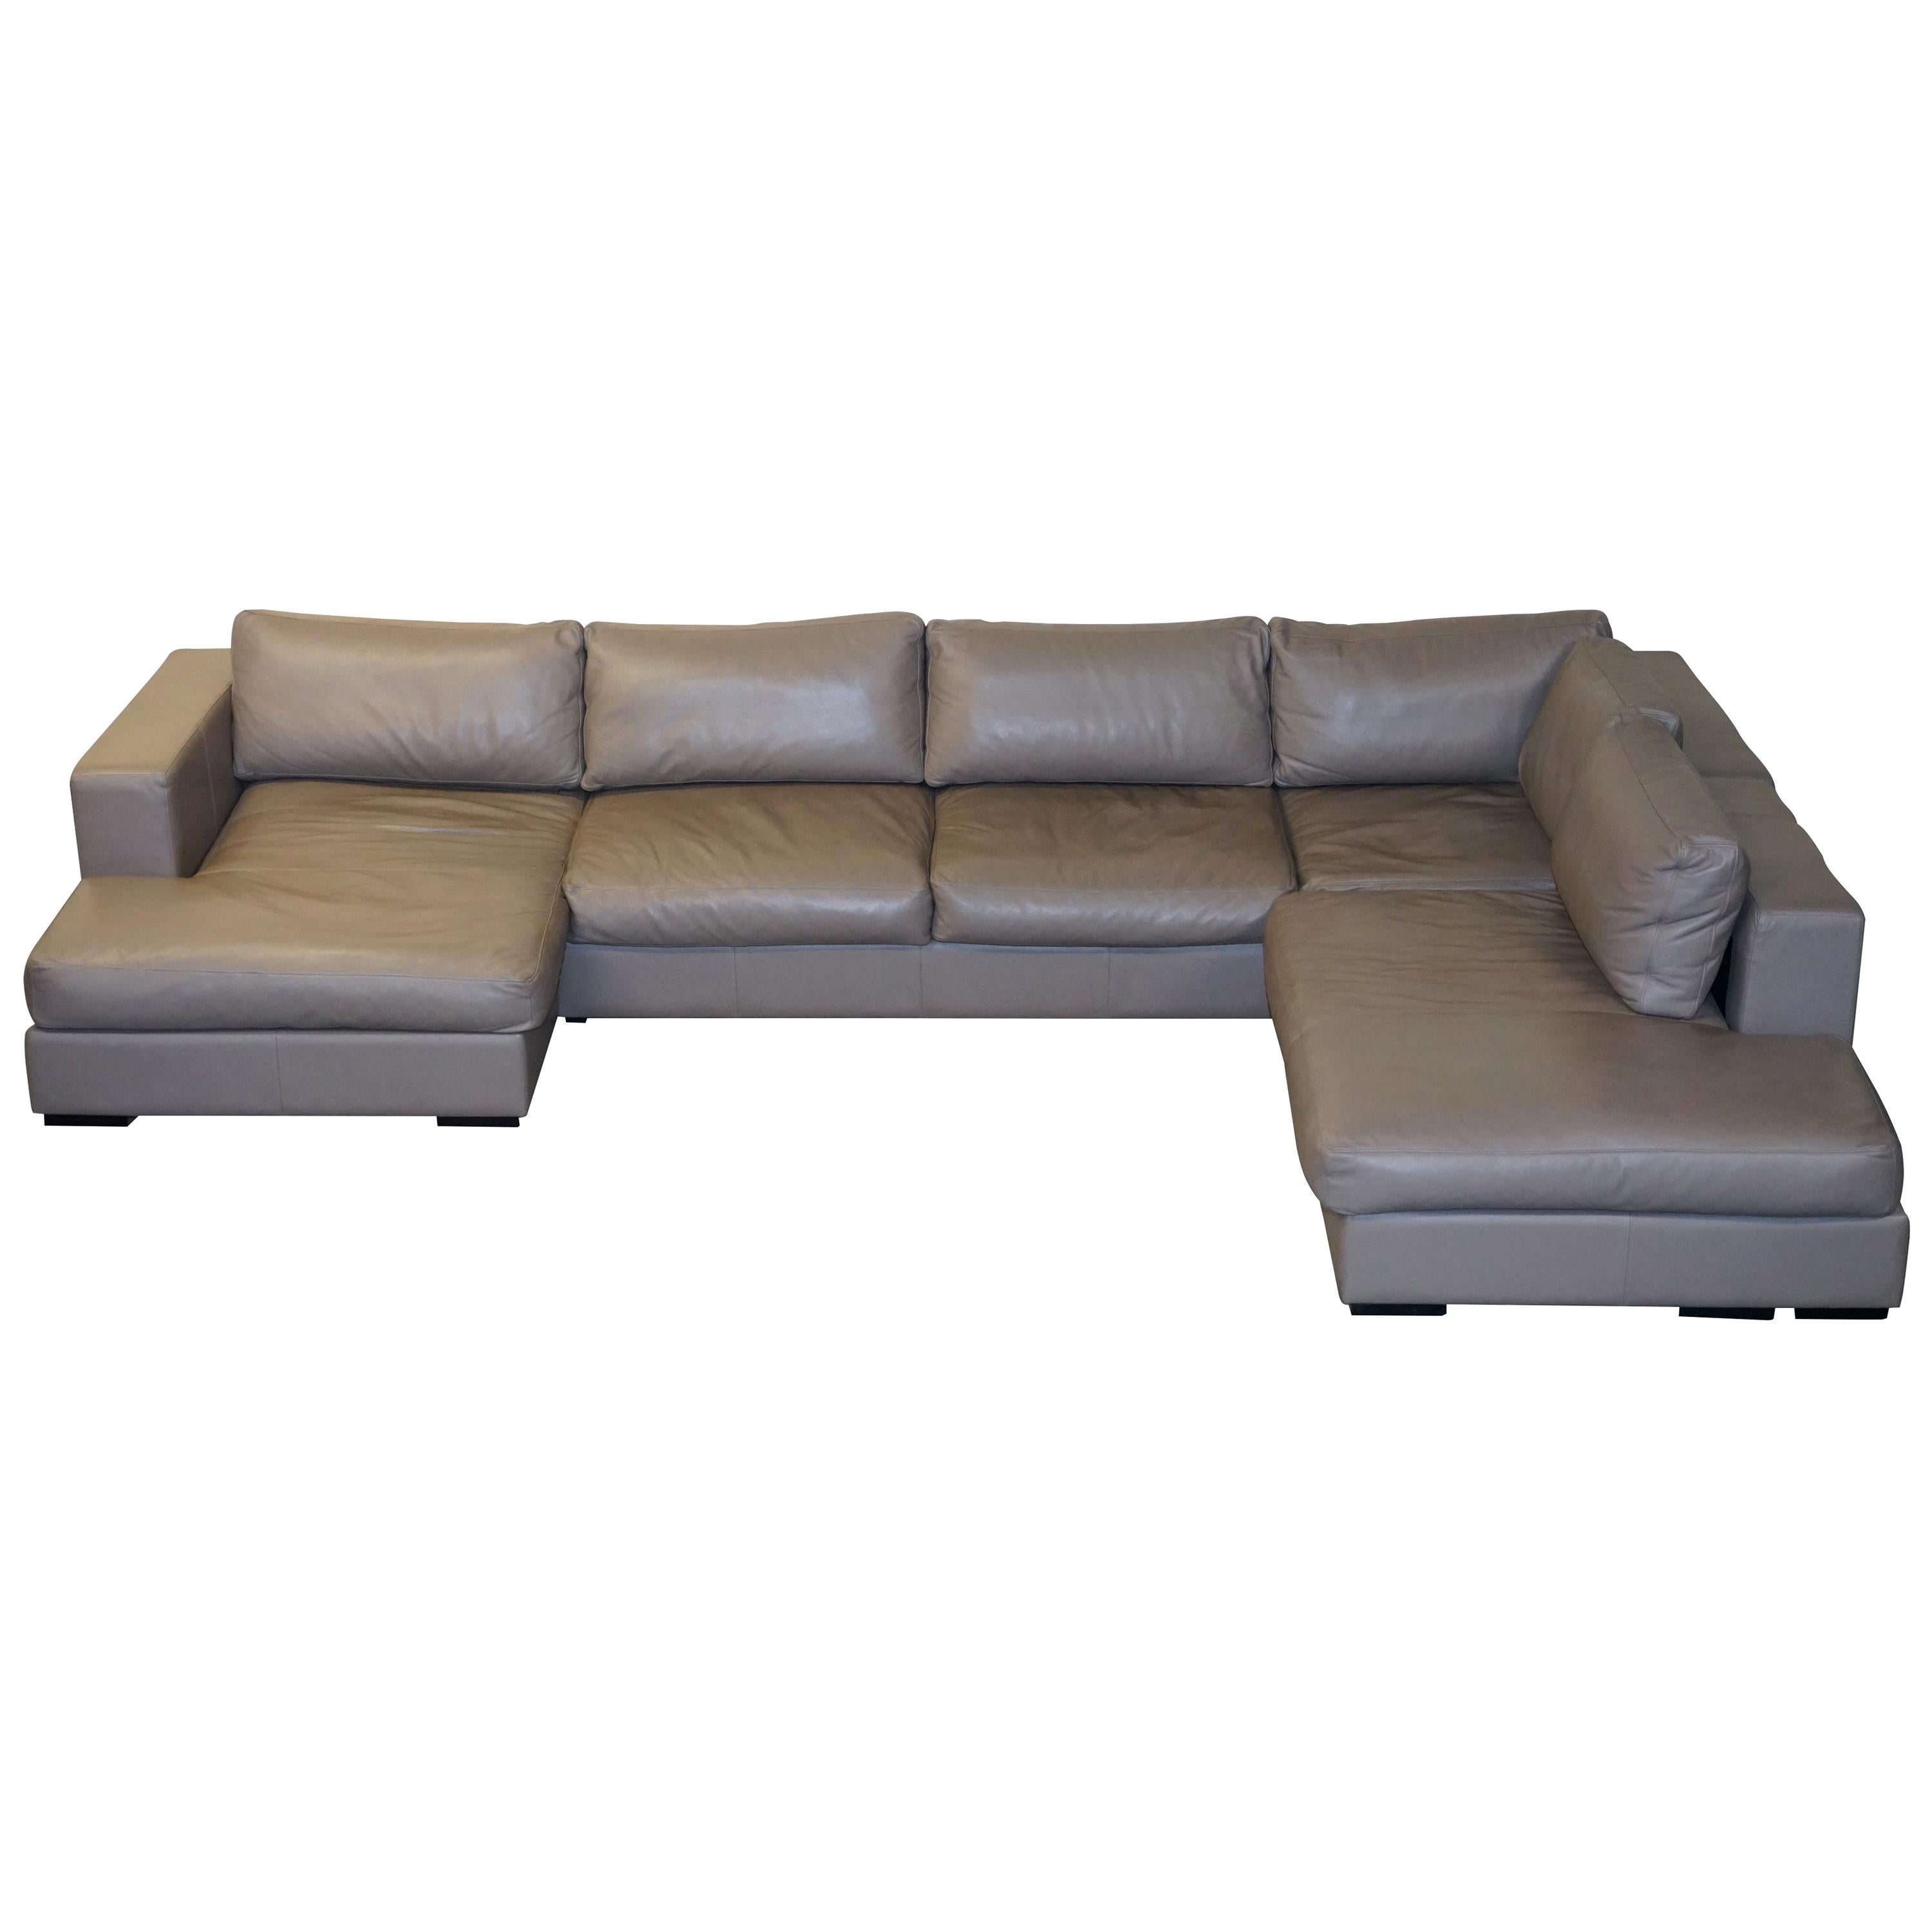 Sublime Bo Concepts Cenova Grey Leather Corner Sofa Chaise Seats 5-6